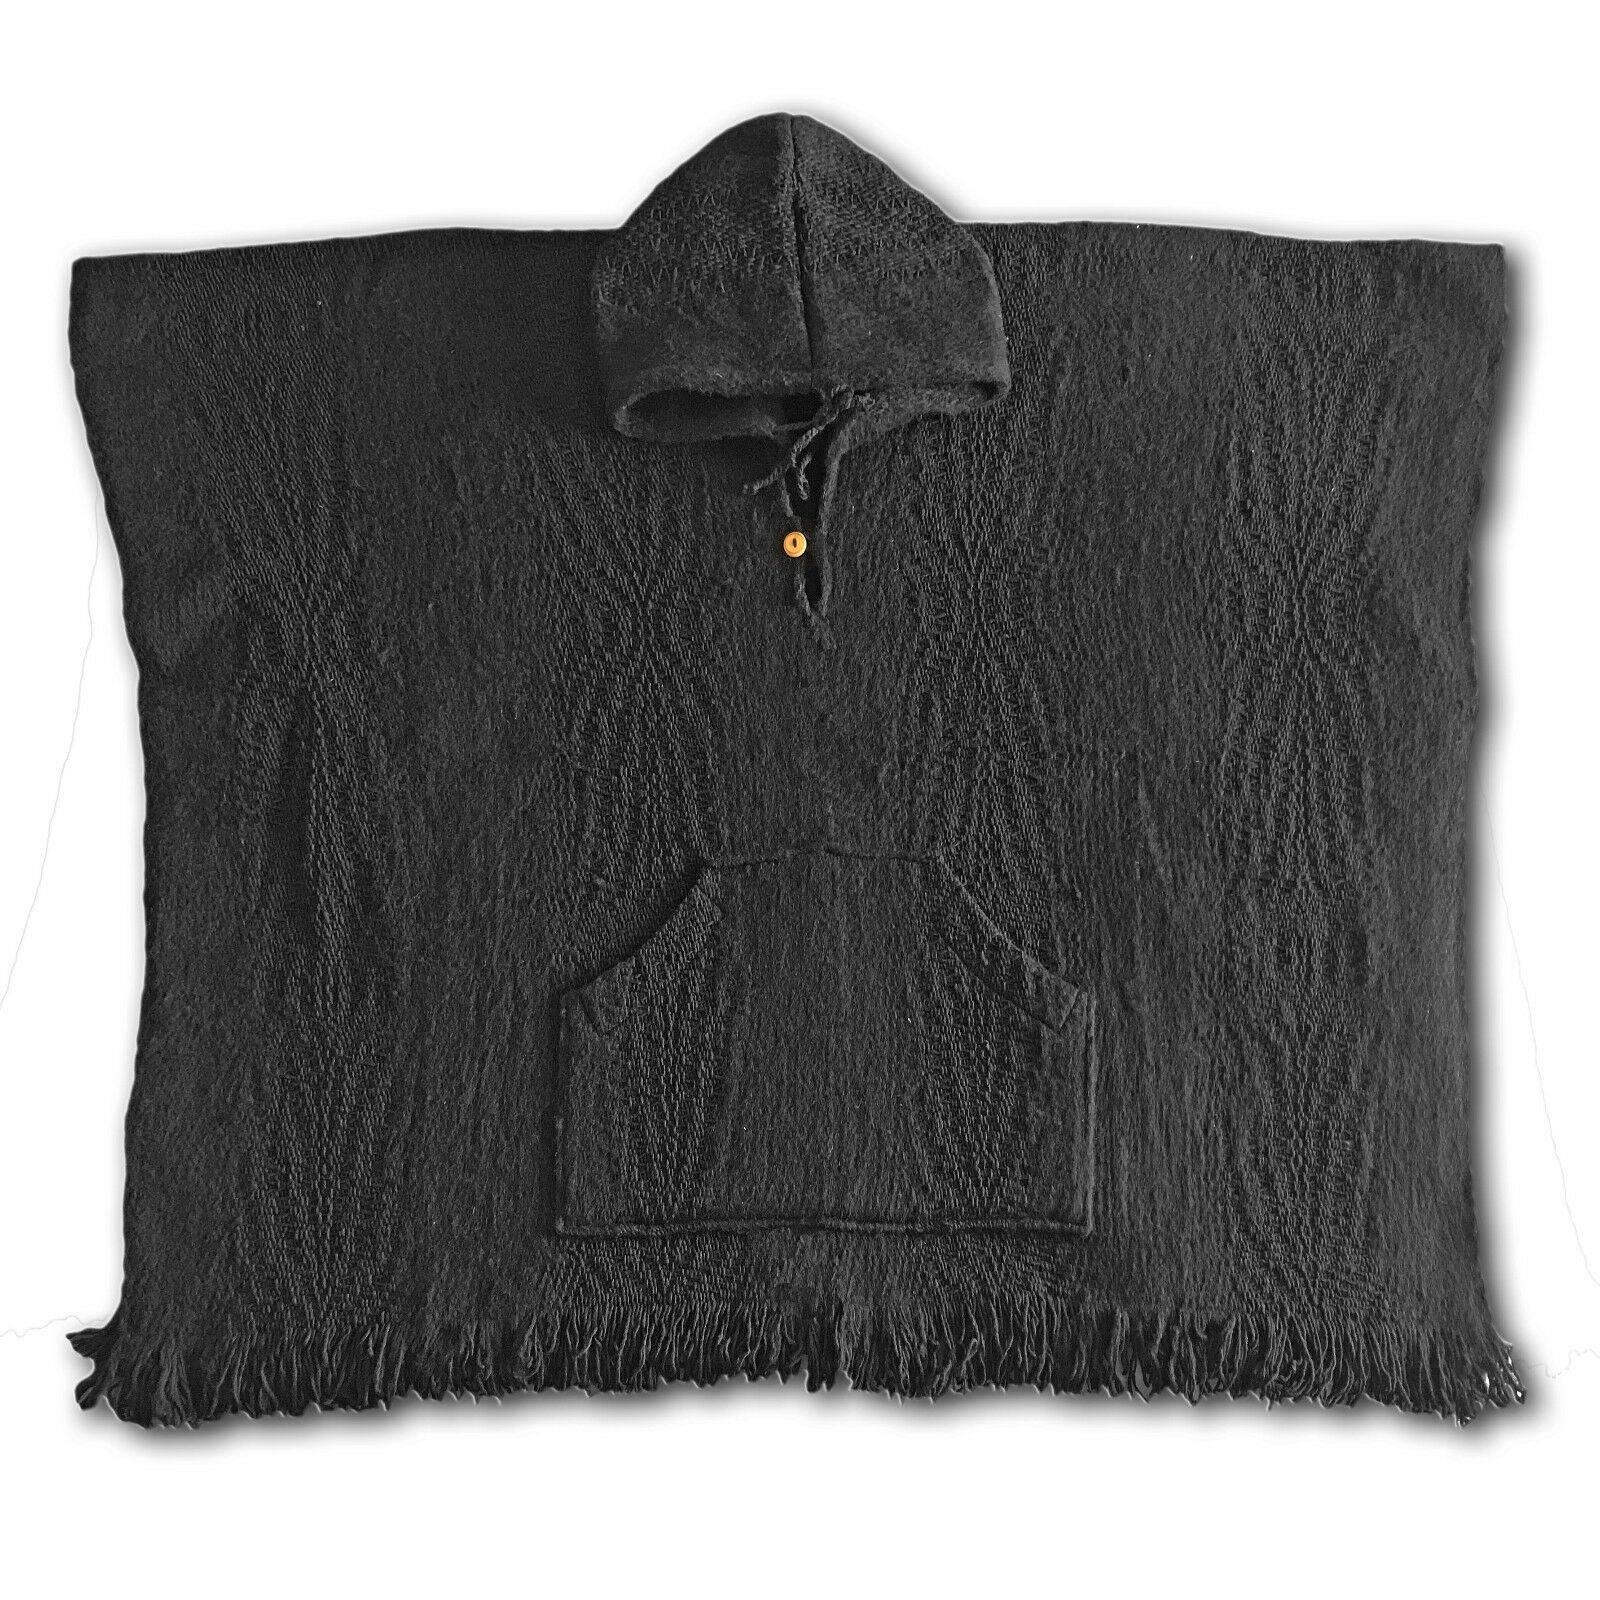 Llama Wool Unisex South American Handwoven Hooded Poncho - wavy striped black pattern - pocket